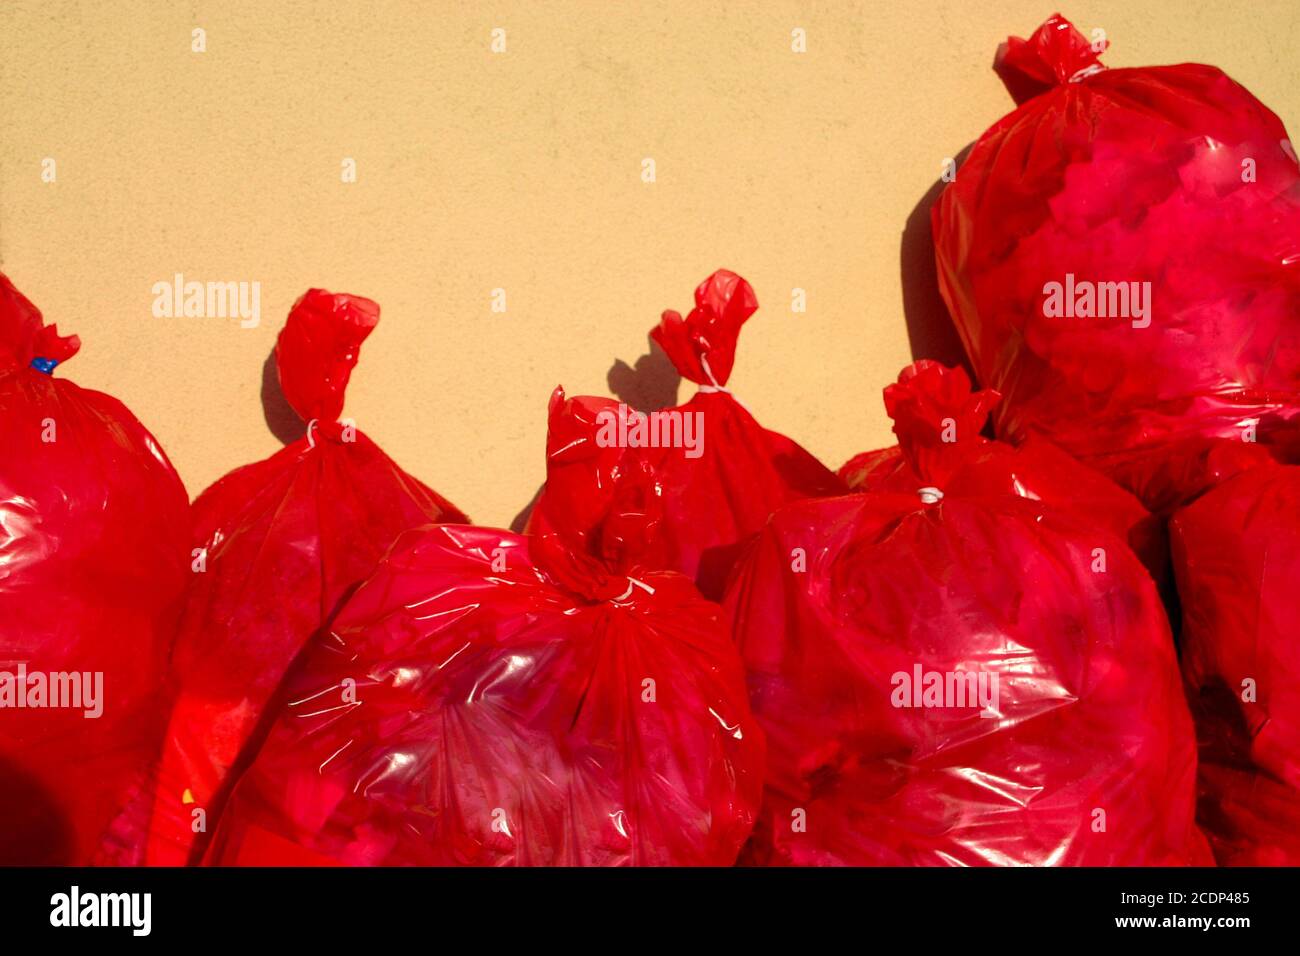 Grupo de bolsas de basura rojas Fotografía de stock - Alamy